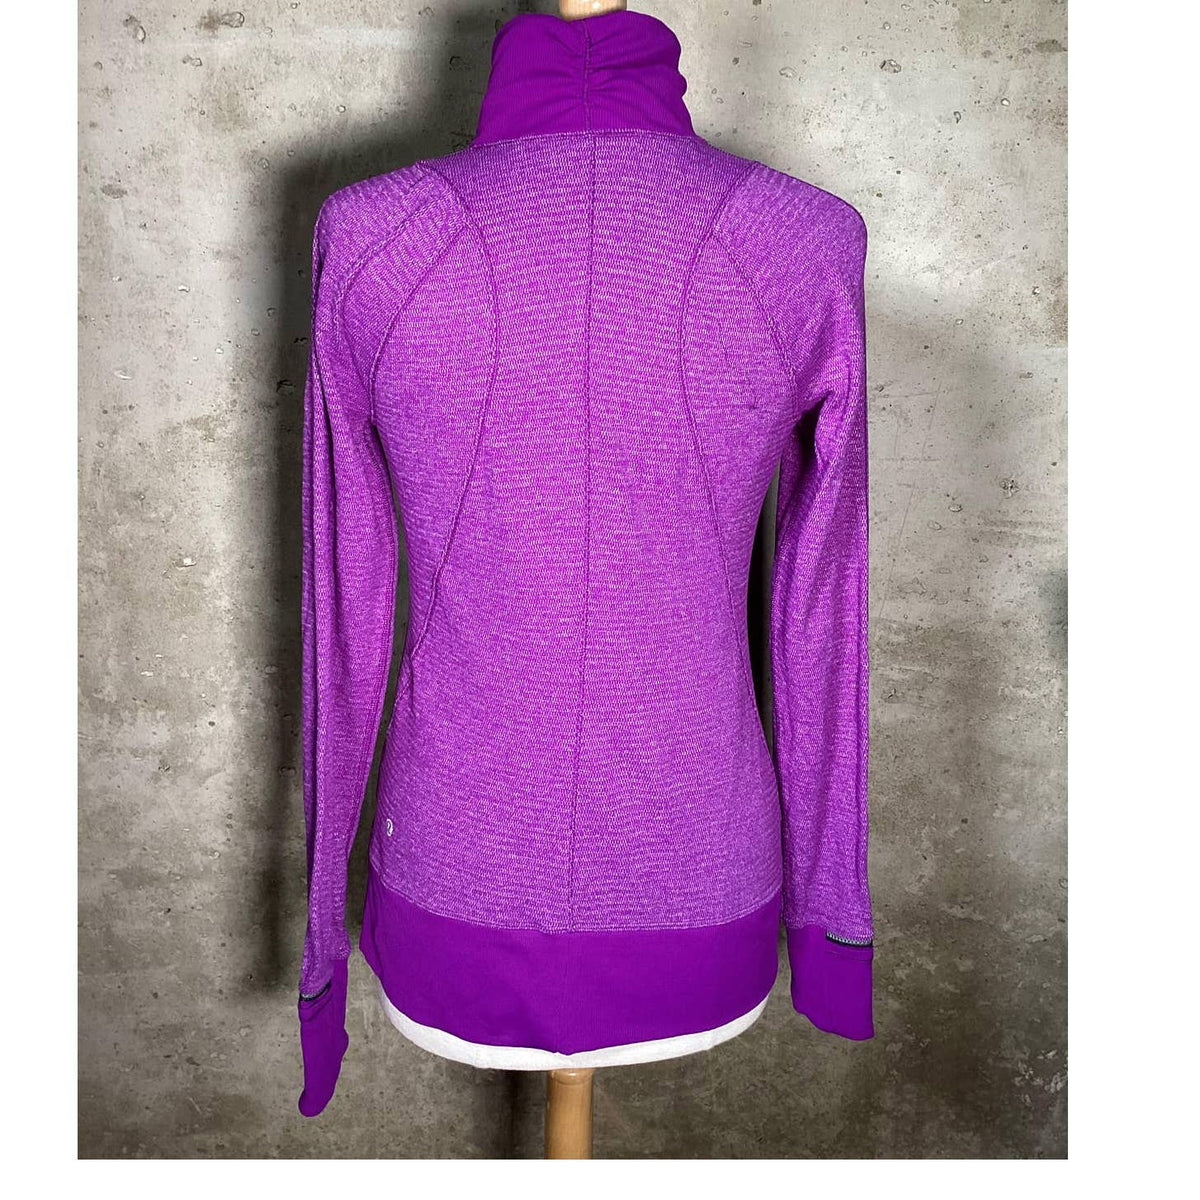 Lululemon Purple Sweatshirt Sz.4